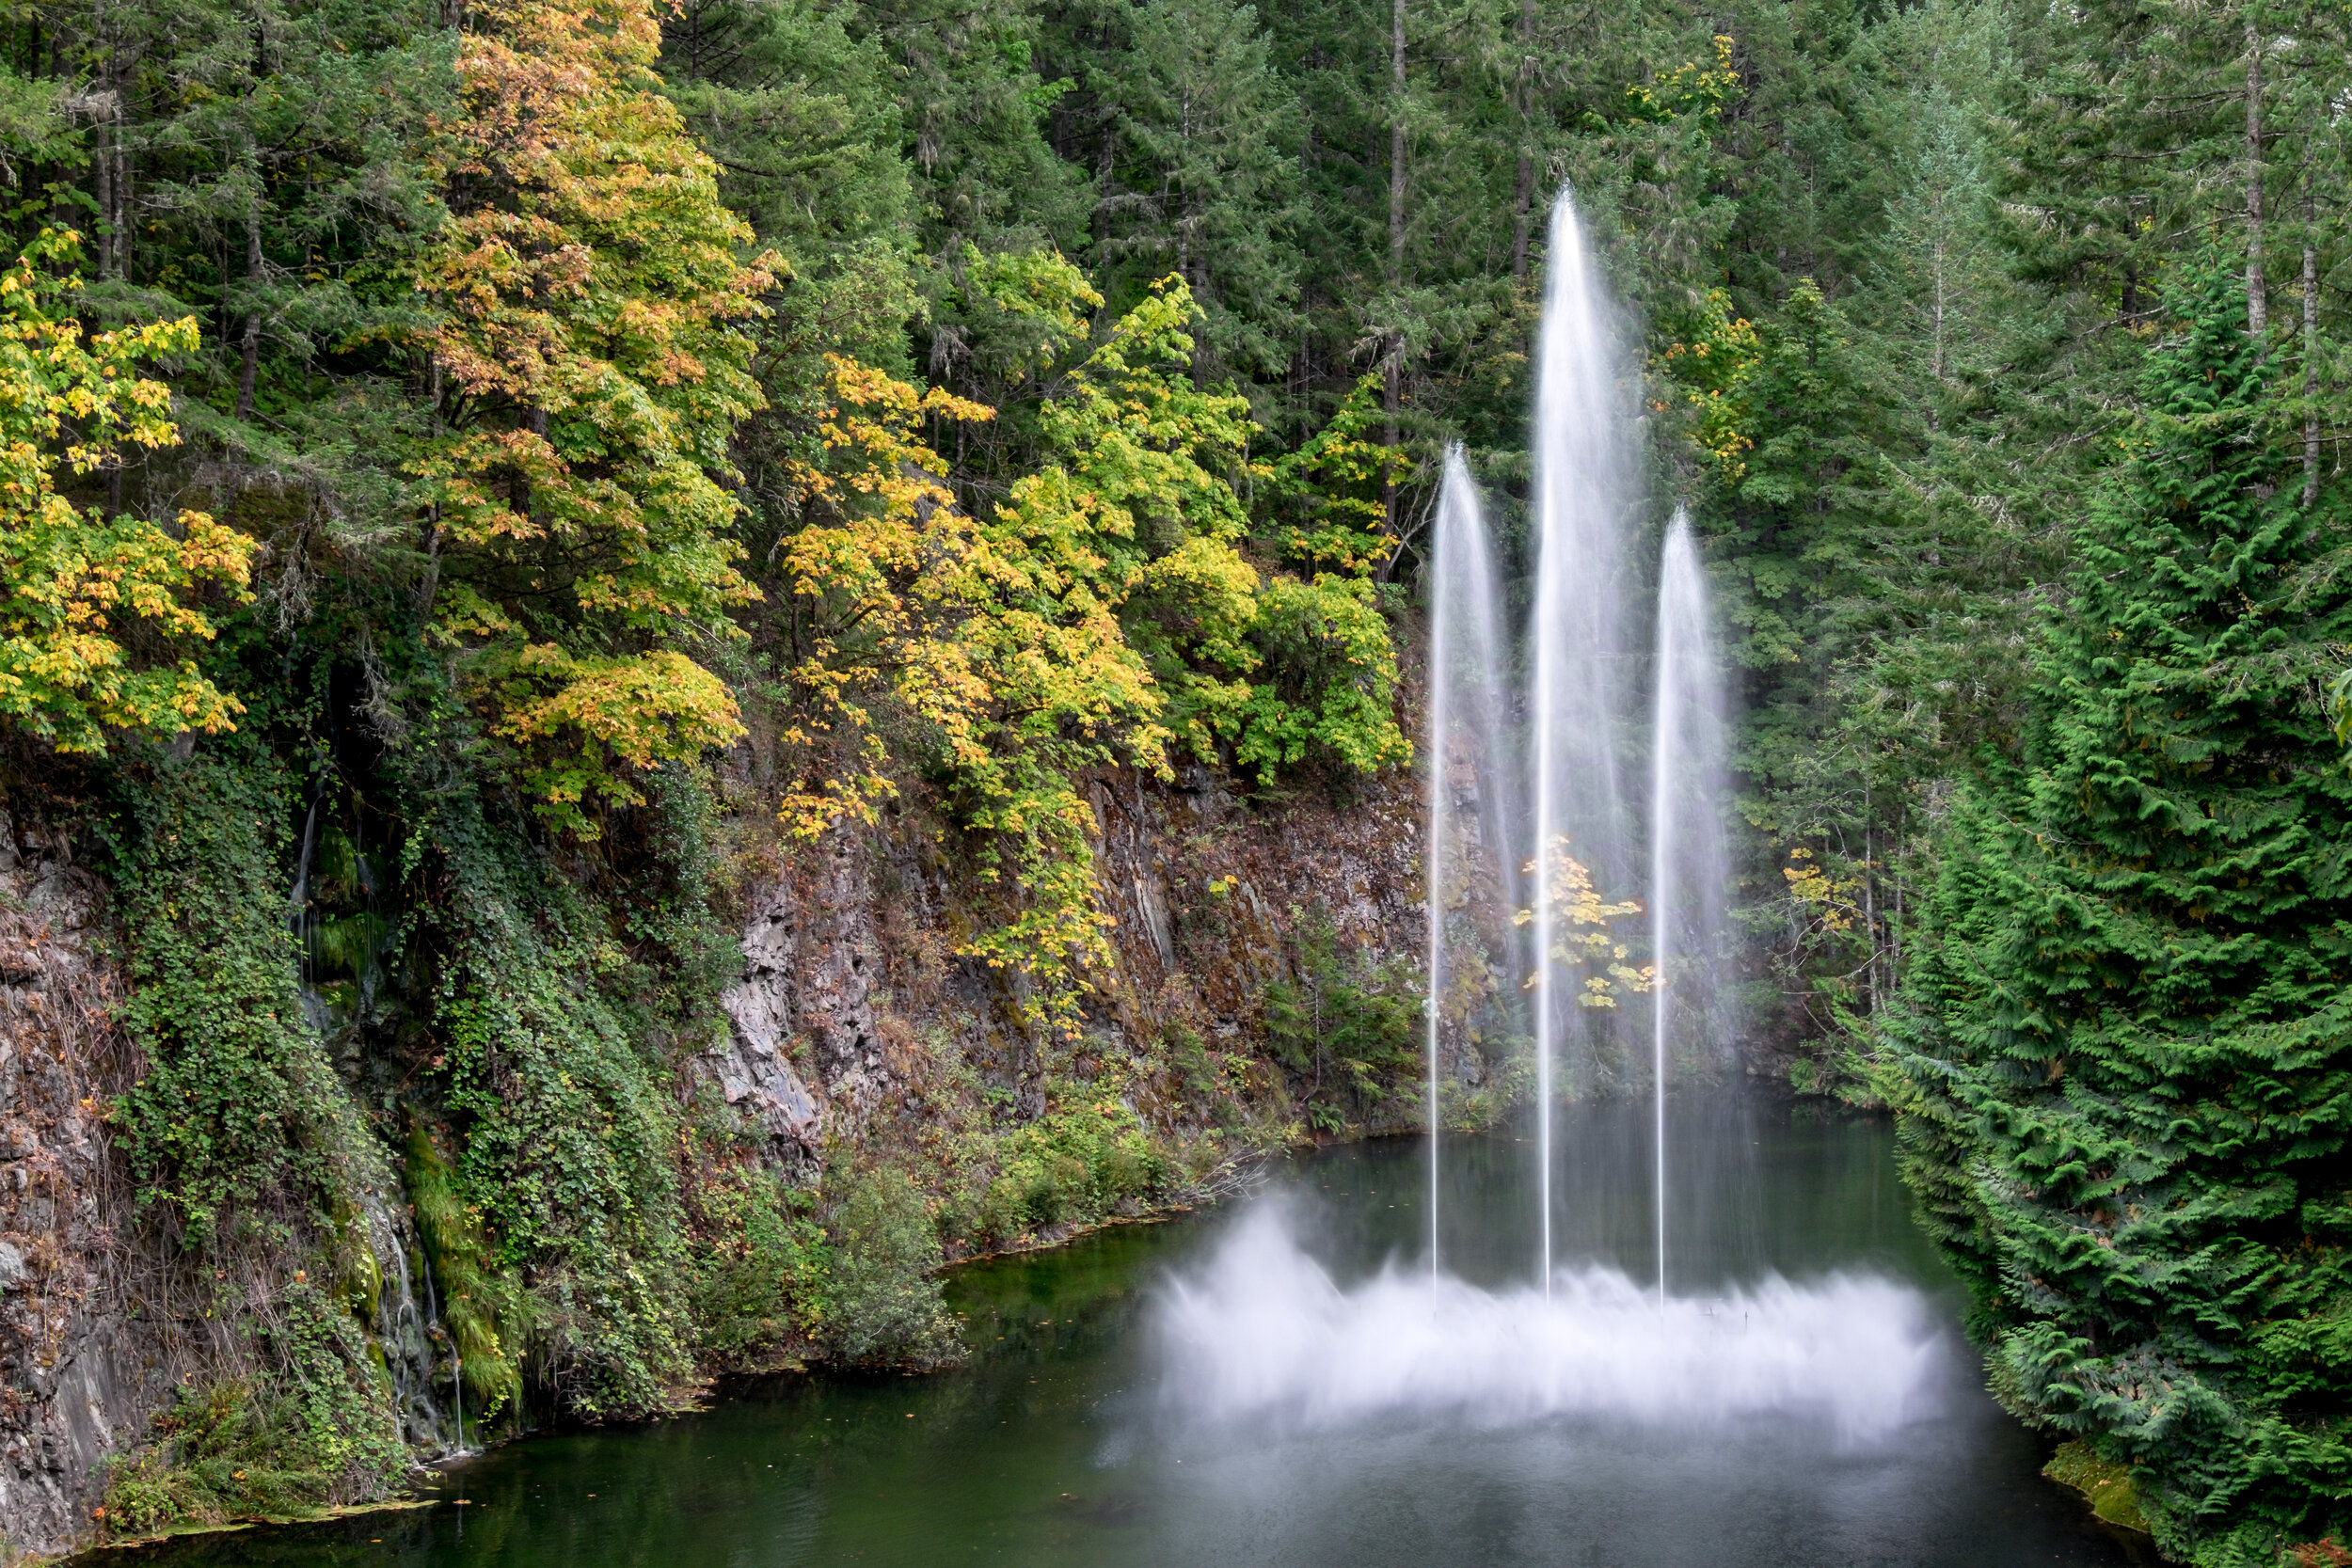 Water Fountain at the Butchart Gardens, British Columbia, Canada Fuijfilm X-T1 2017-10-07 DSCF5733.jpg